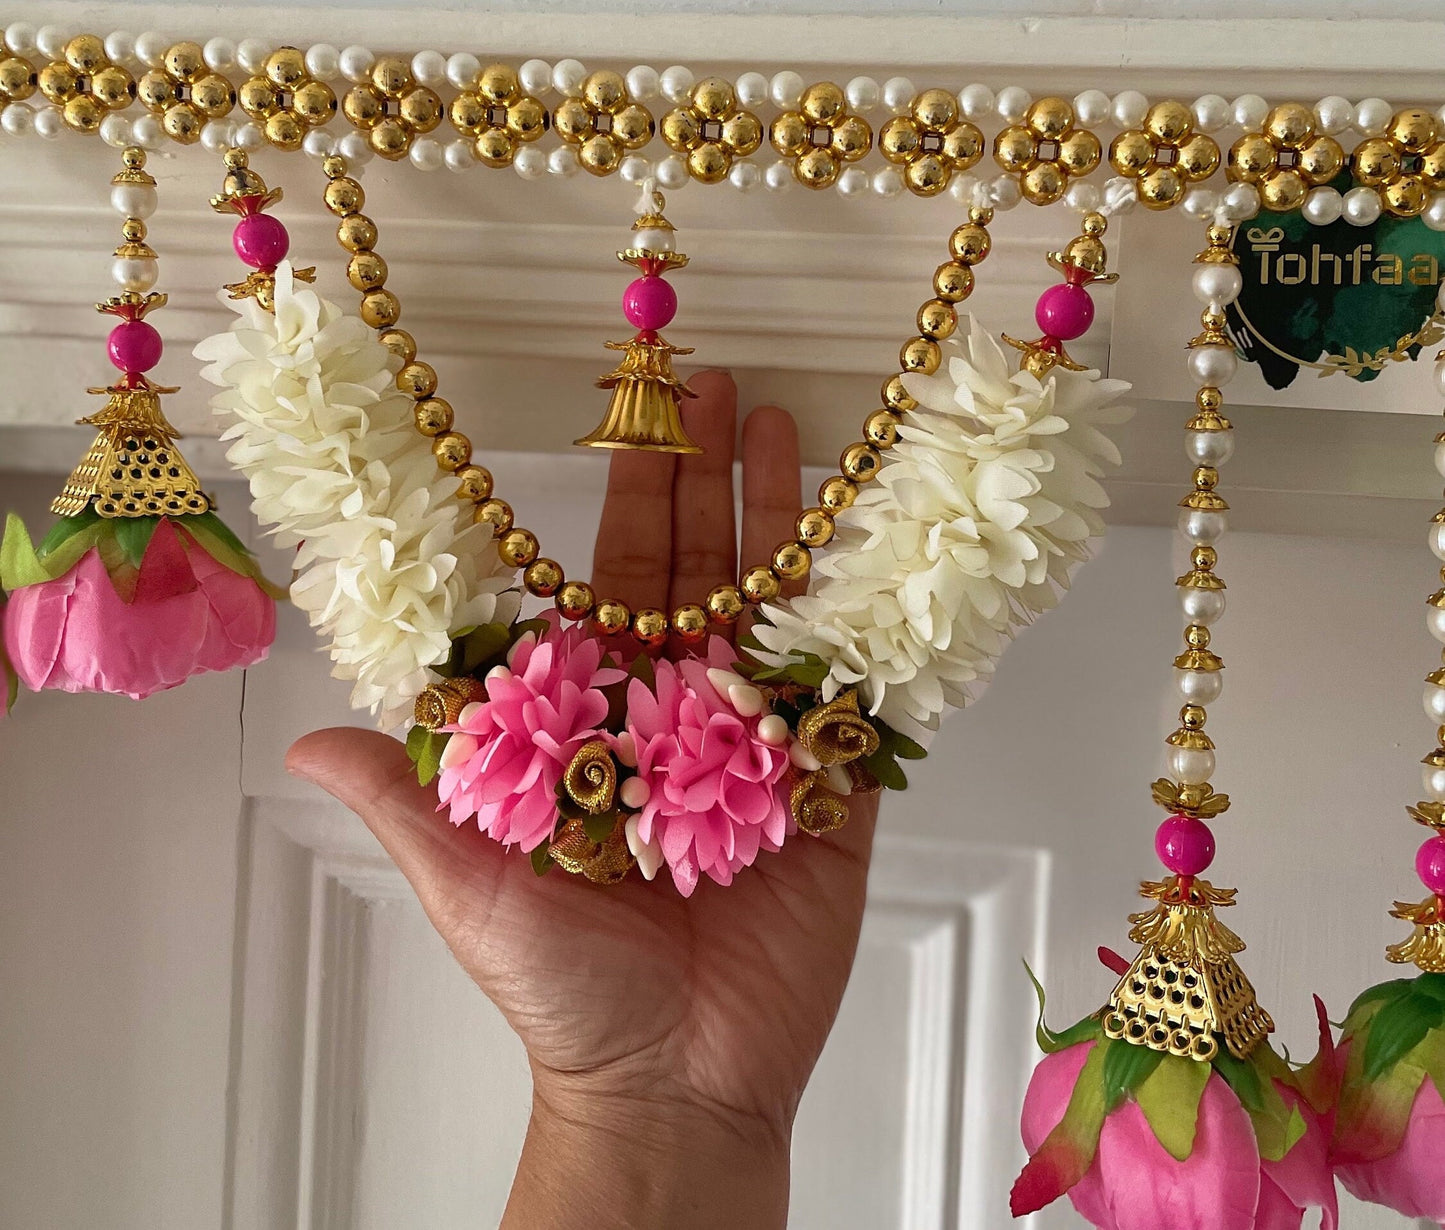 Diwali Weddings Decorations Toran Thoran Thiran Banderwal Door Hanging Marigold Sage Satin Silk Flowers Pearl Bells New Home Housewarming